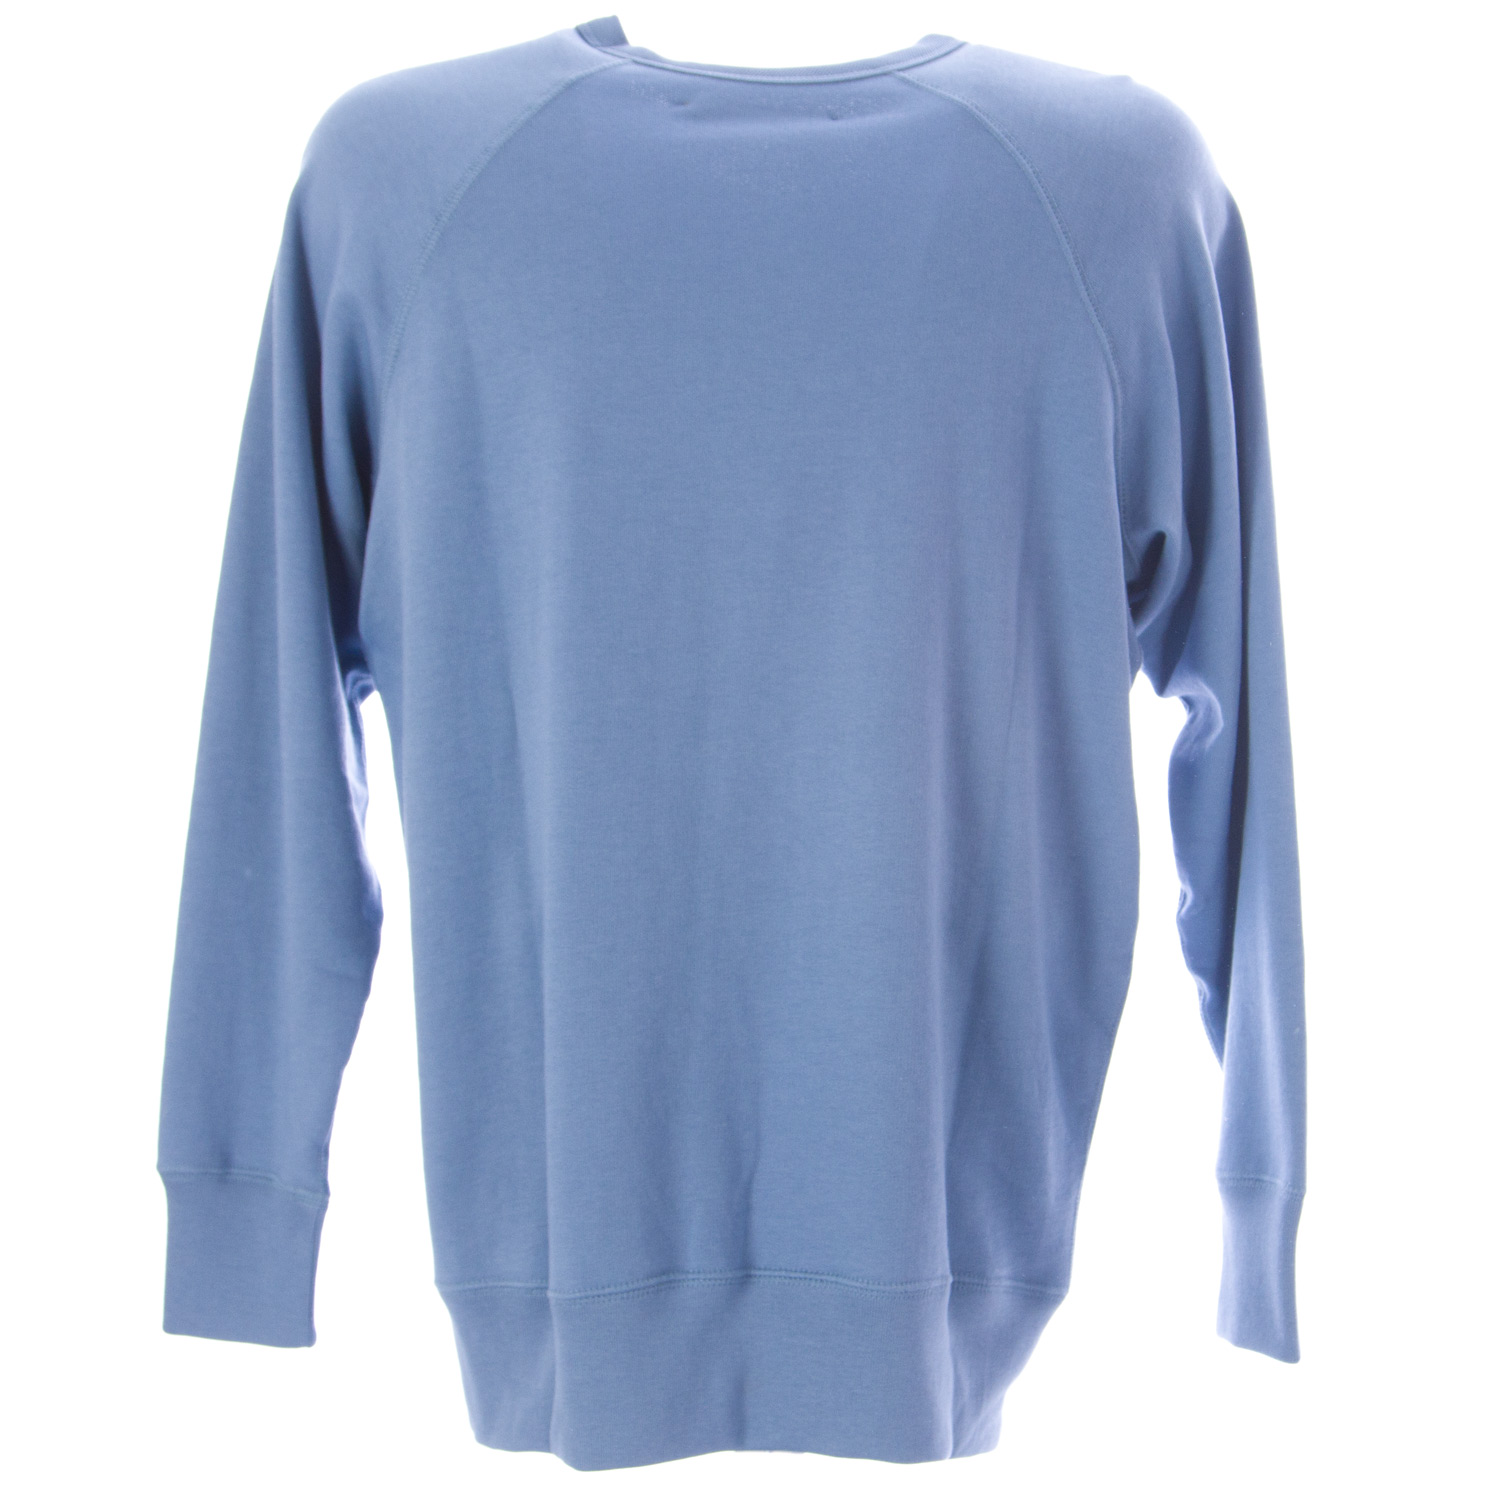 OLASUL Men's Cobalt Reversible Crewneck Sweatshirt $130 NEW | eBay